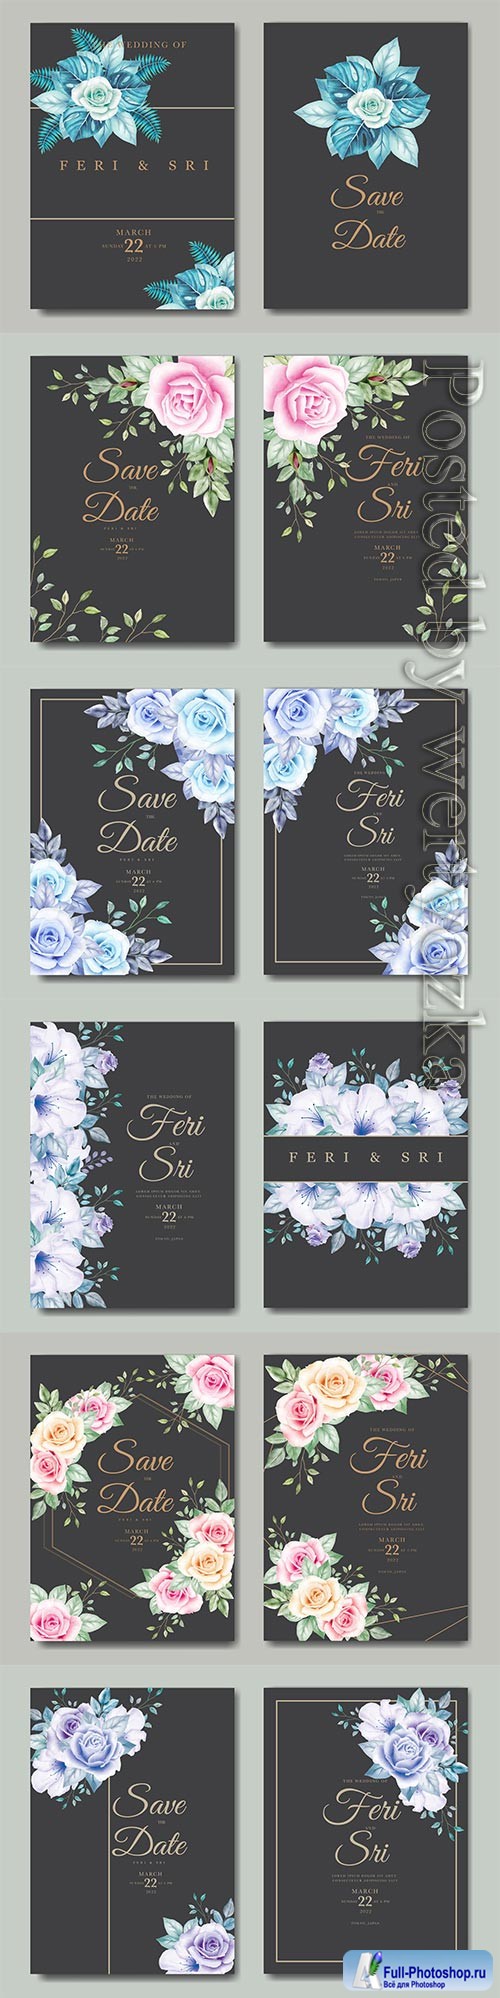 Wedding vector invitation card with floral watercolor